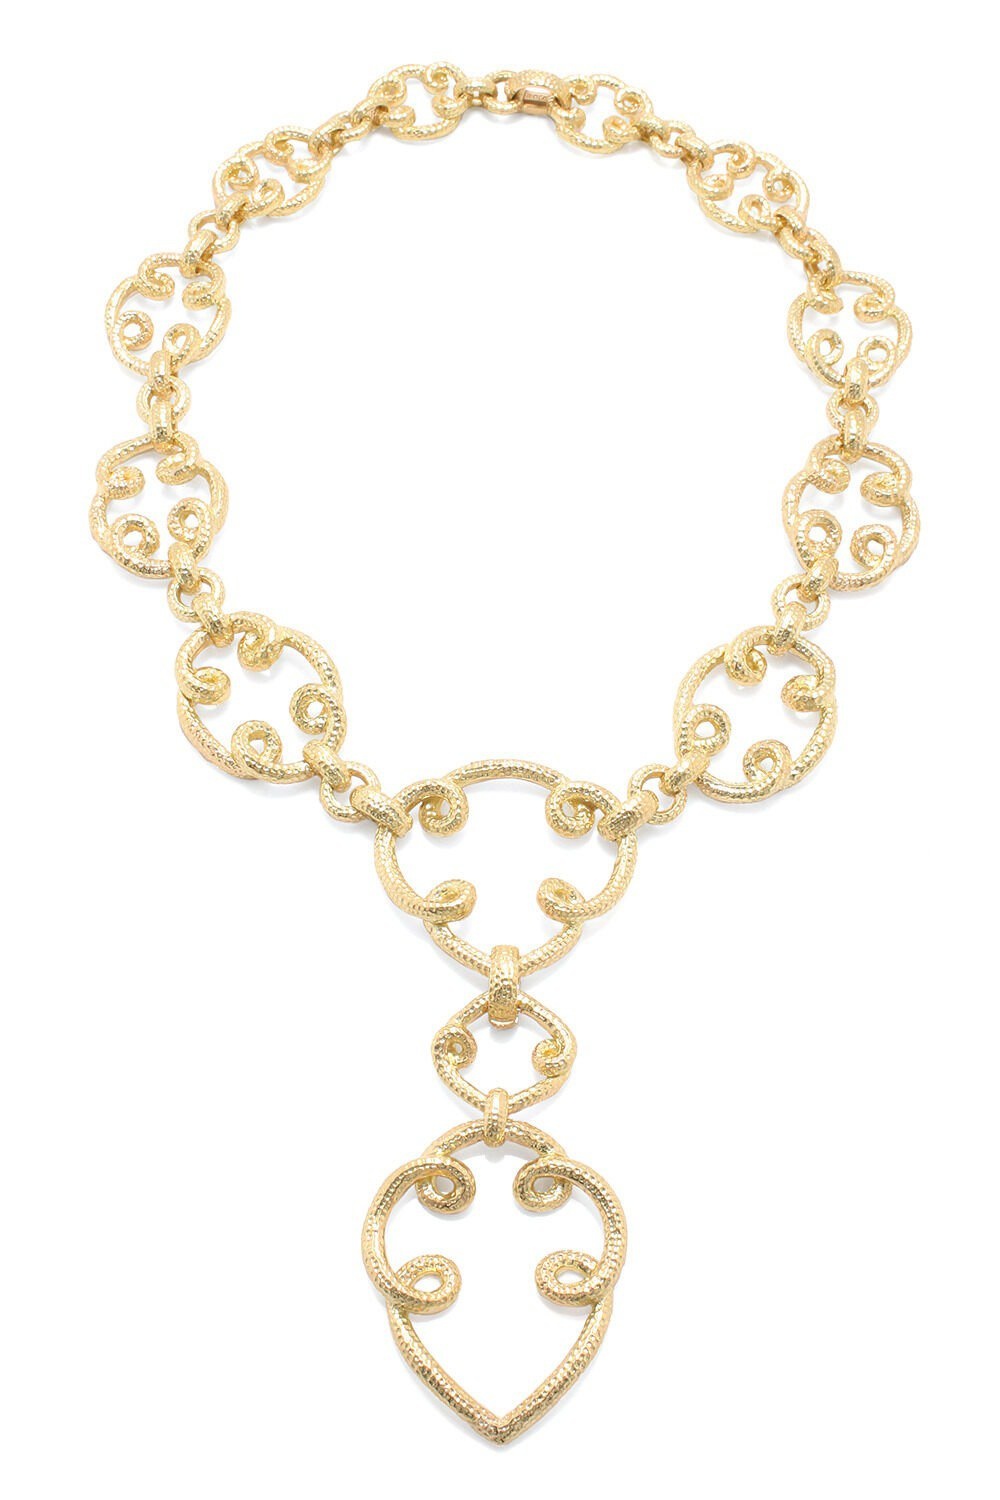 Arabesque Loop Chain Necklace - 1